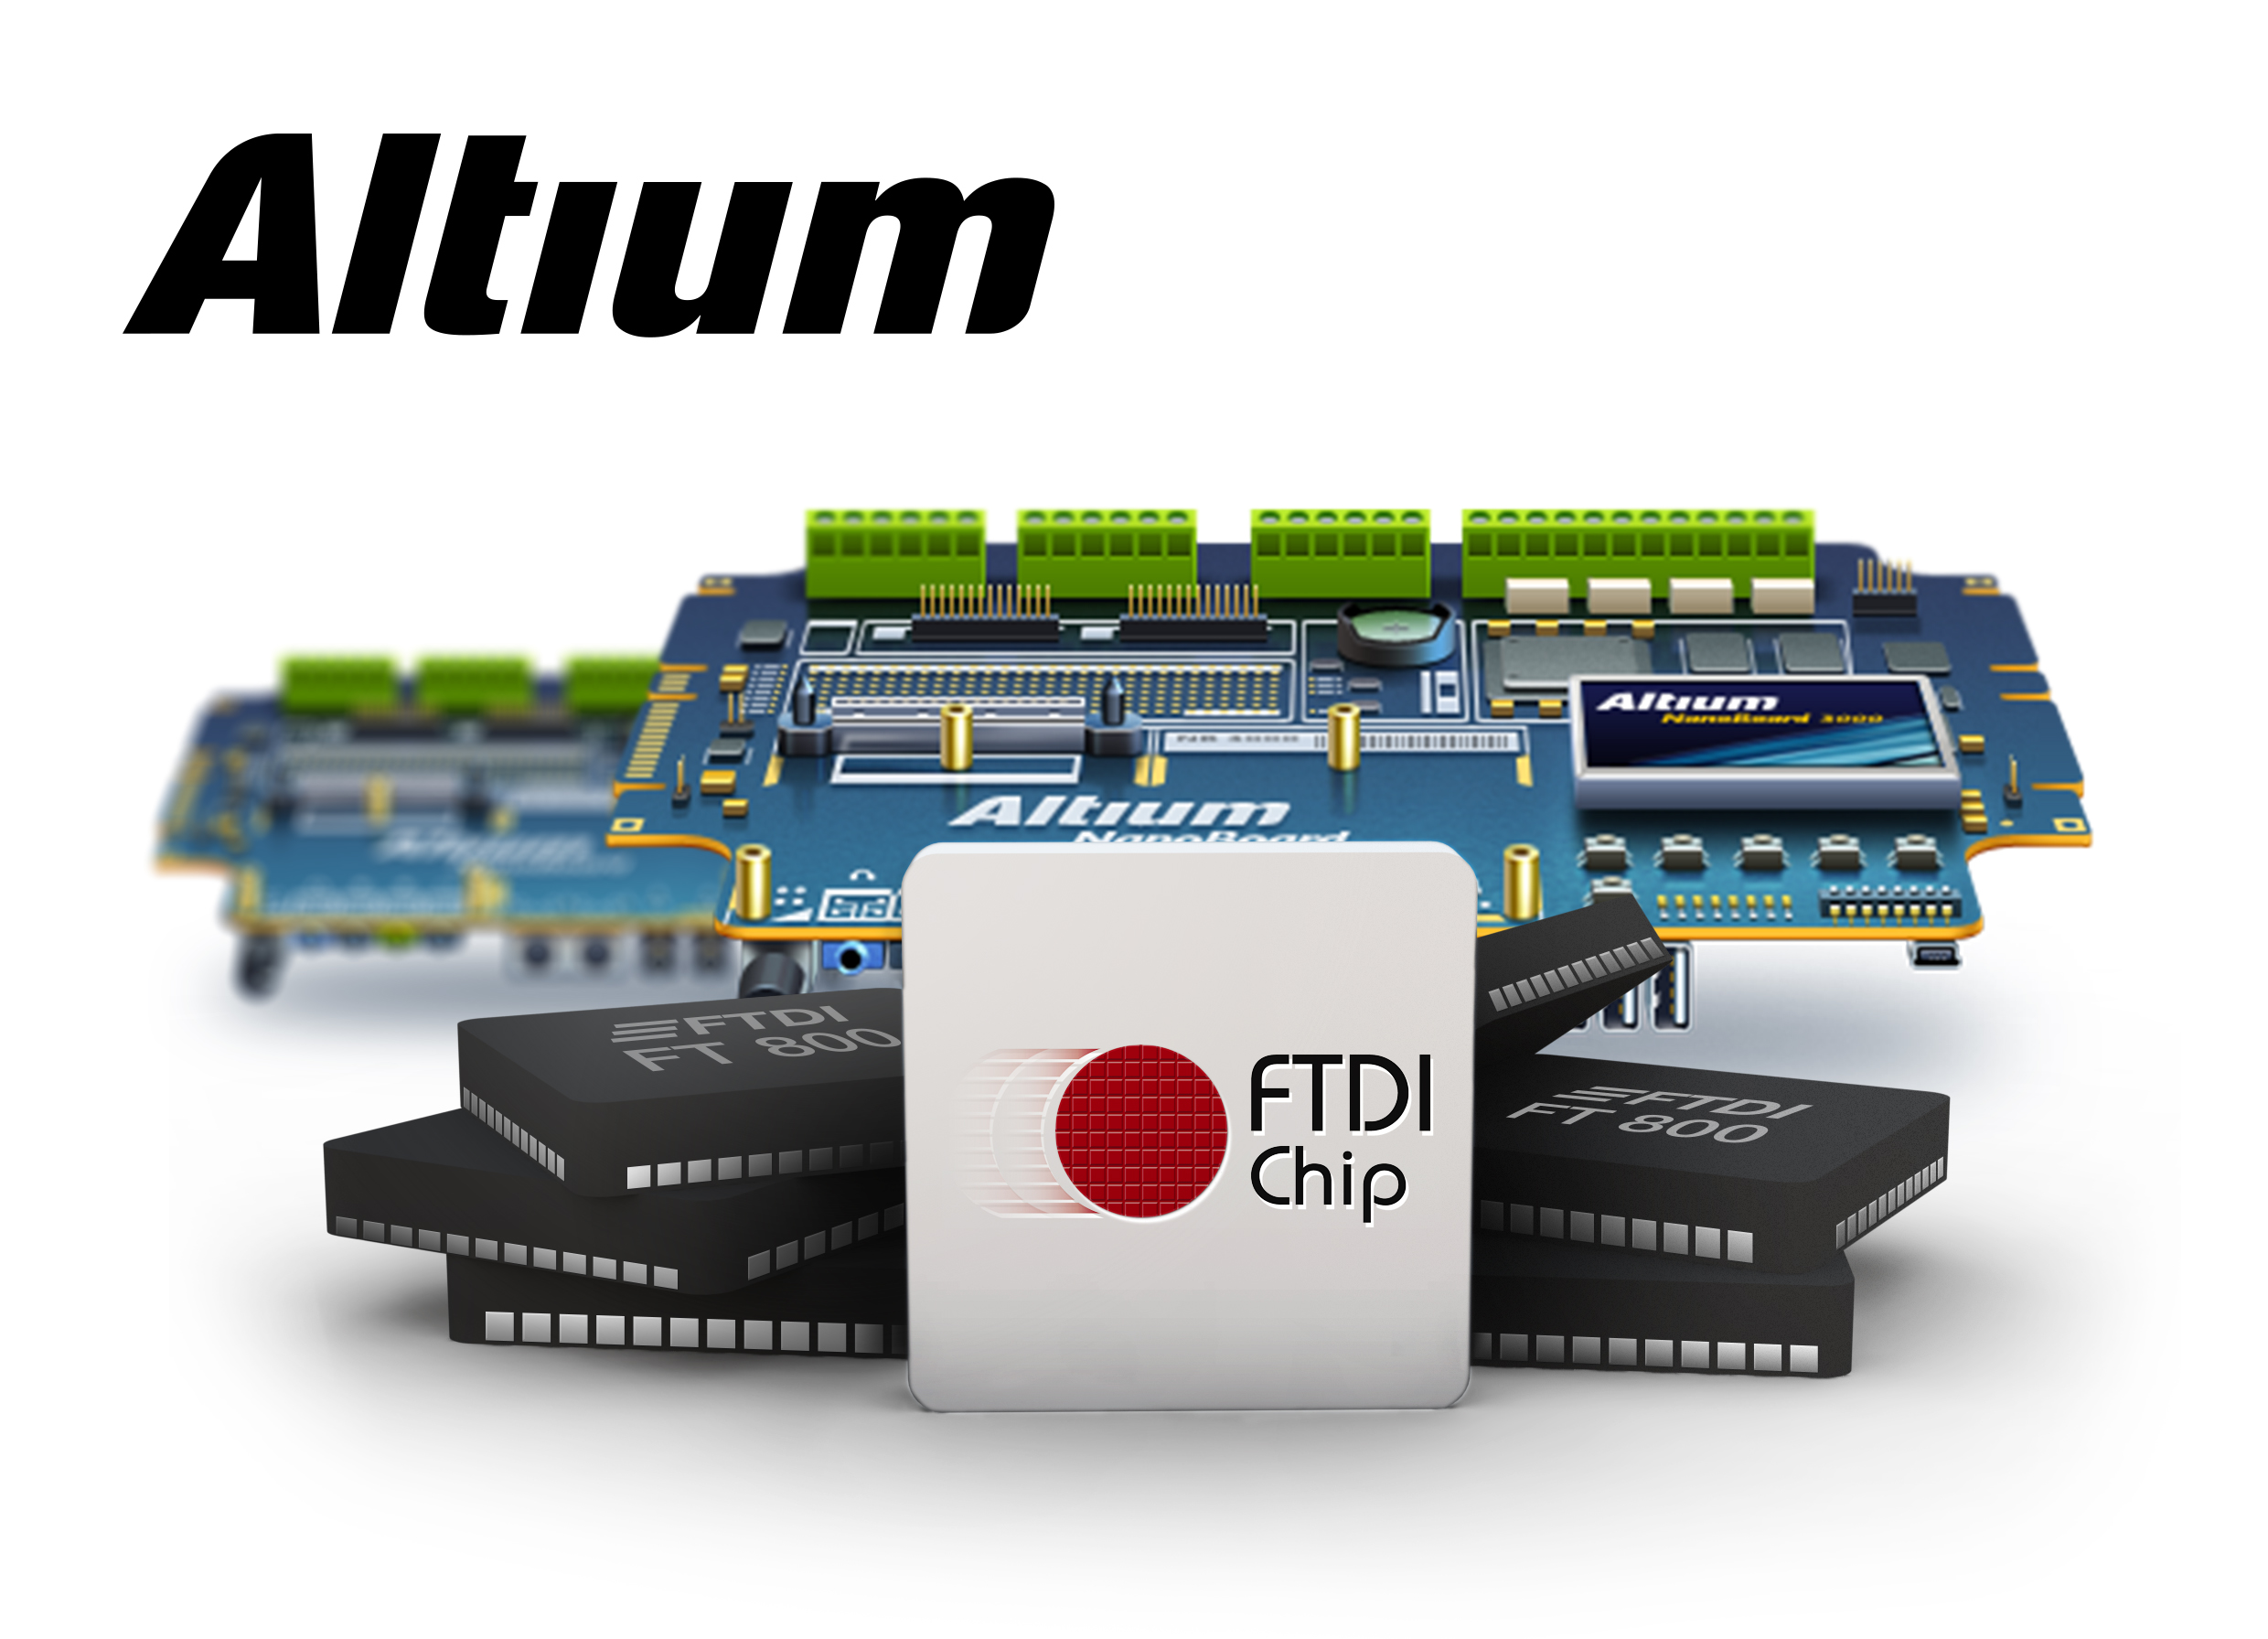 Altium partners with FTDI to provide board design support